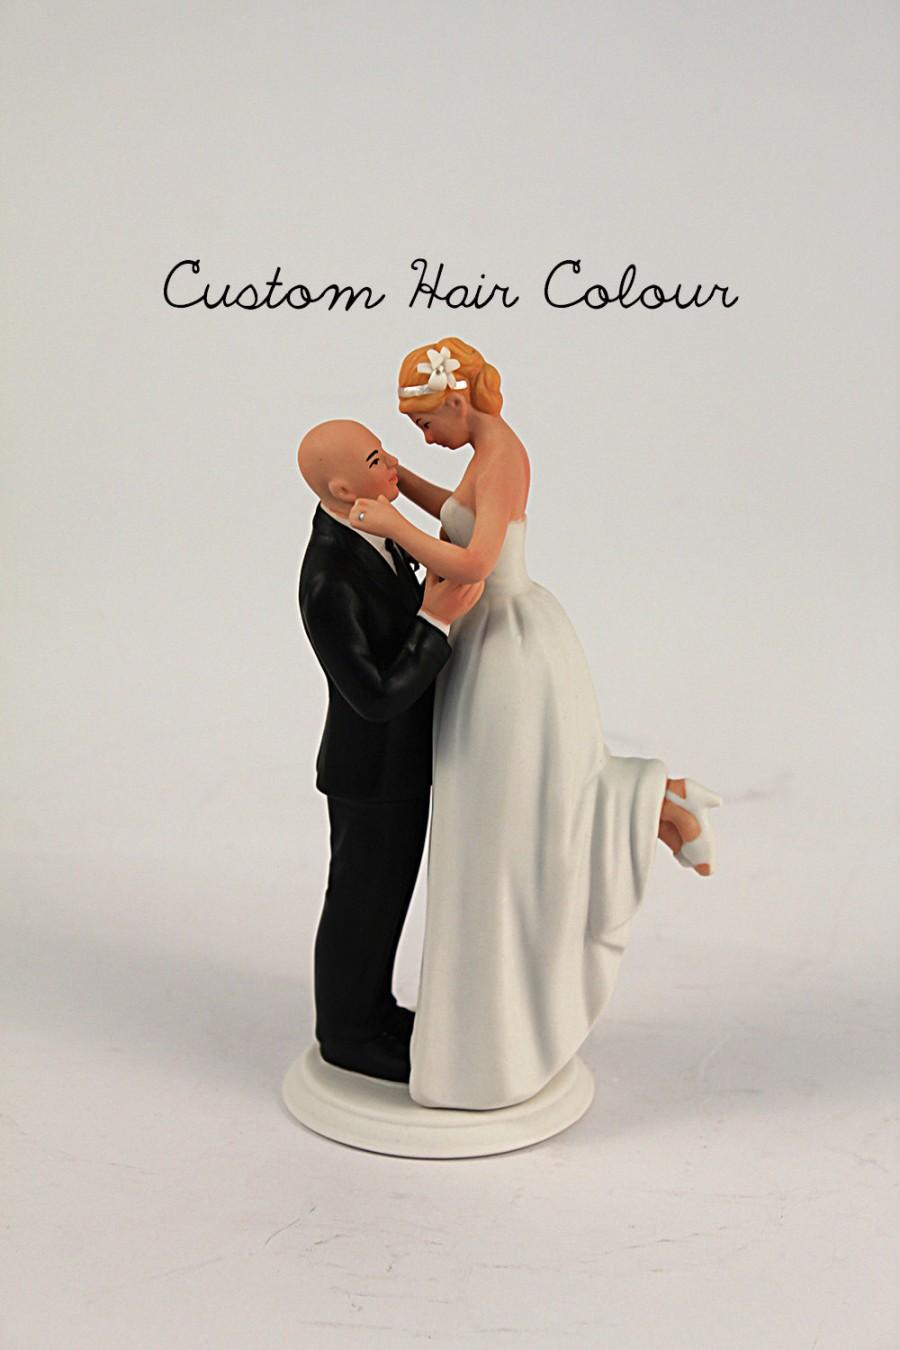 زفاف - True Romance Interlocking Bride and Groom Cake Topper - Medium Skin Tone Bald Groom and Light Skin Tone Bride - Personalized Wedding Toppers